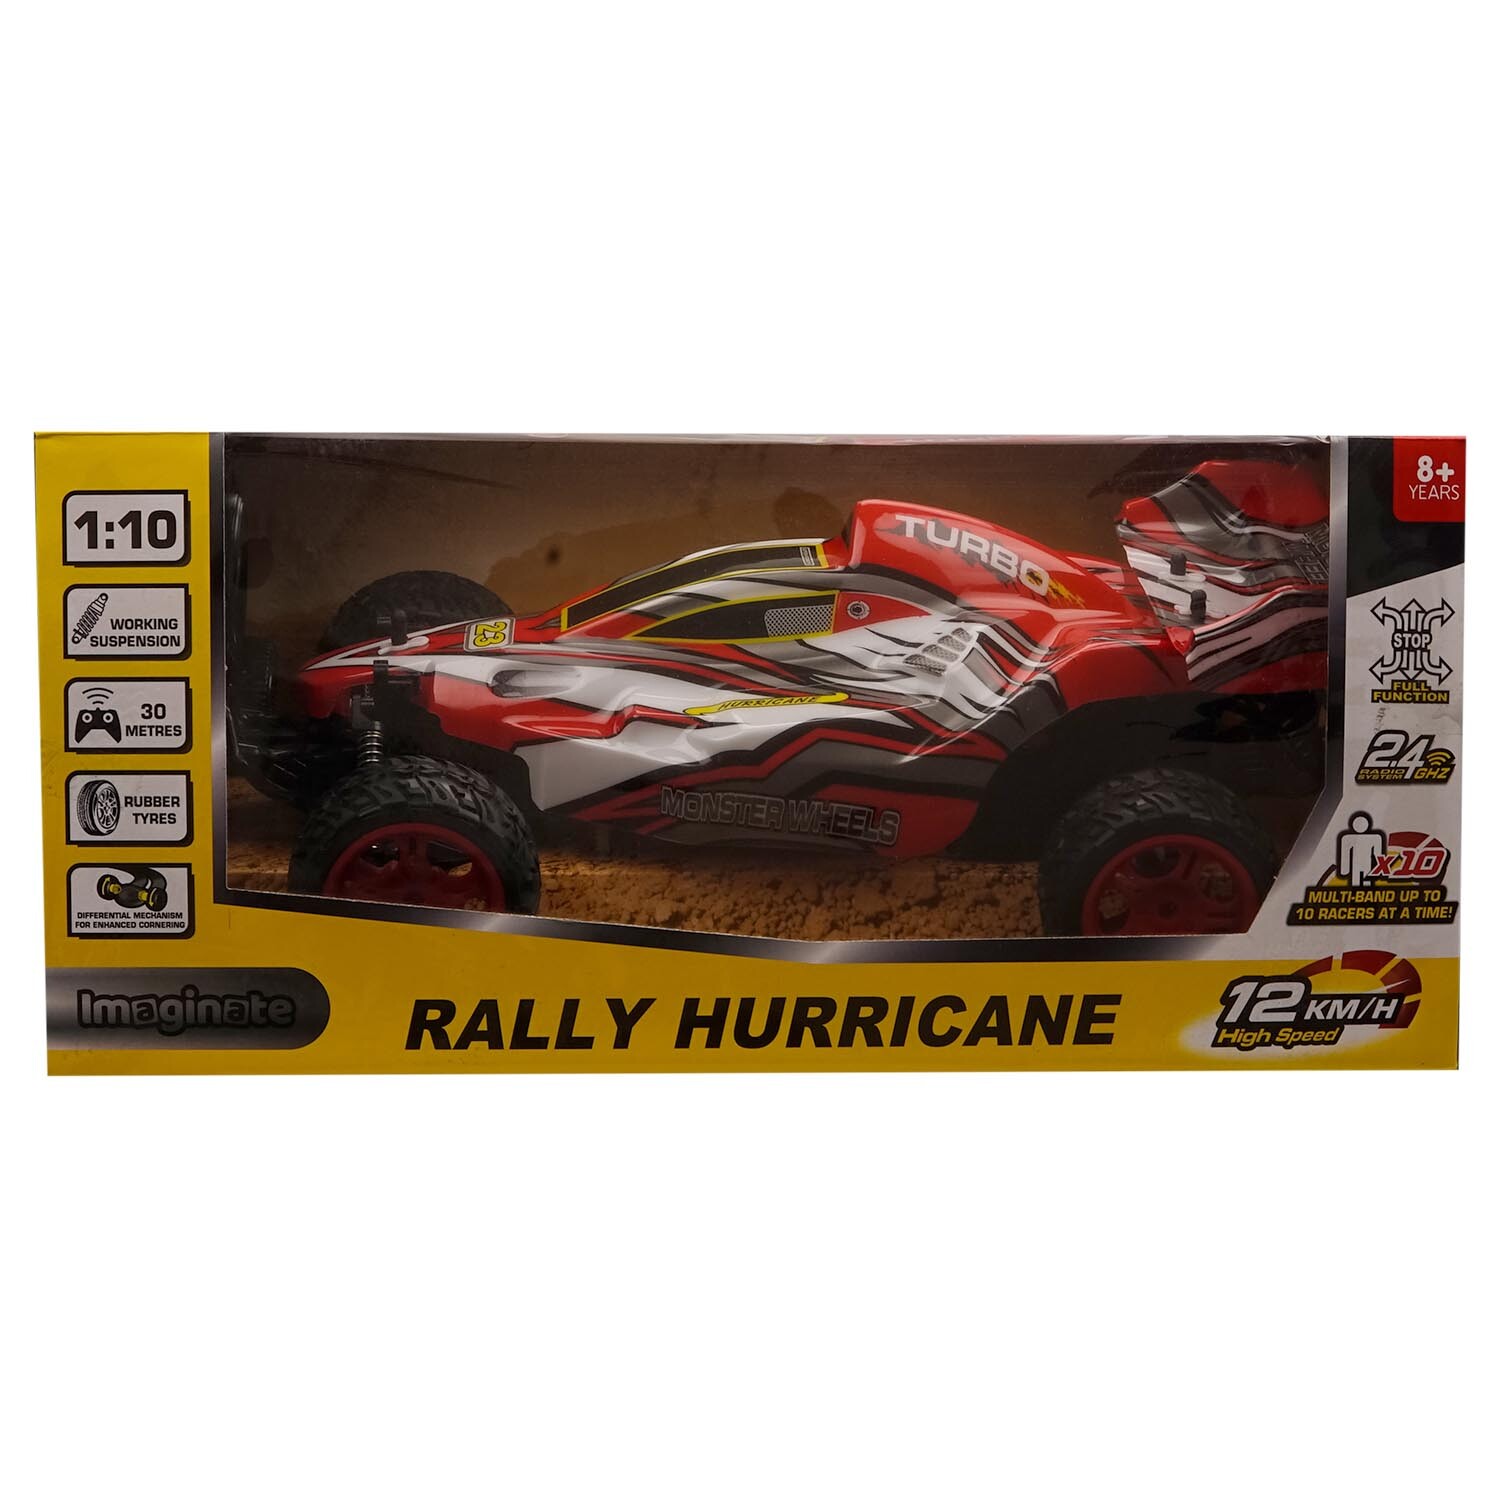 Imaginate Rally Hurricane Racer Image 3